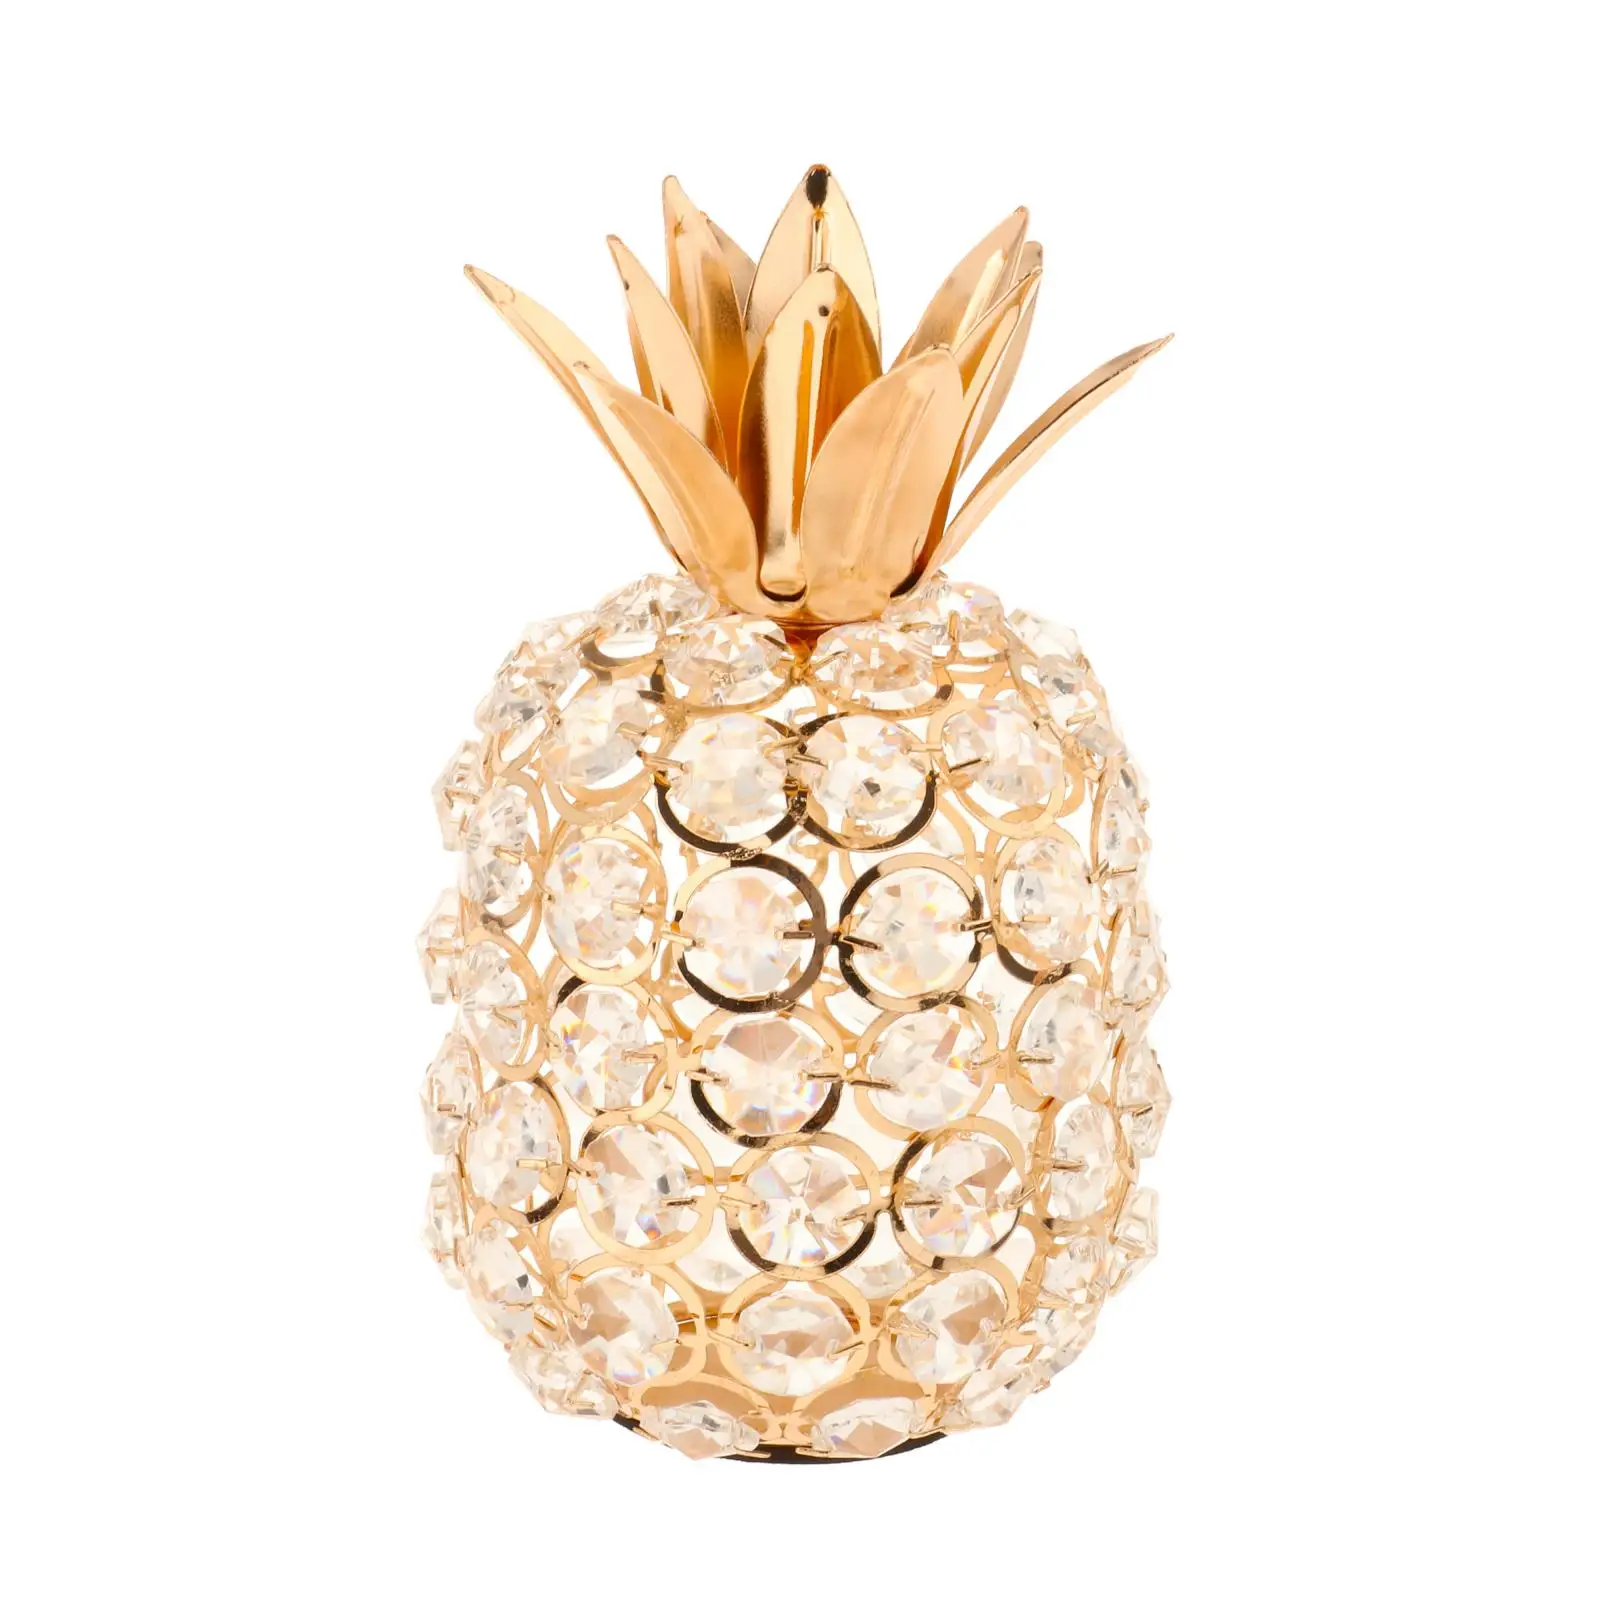 Crystal Studded Pineapple Ornament Handmade Showpiece Statue Decor Crafts